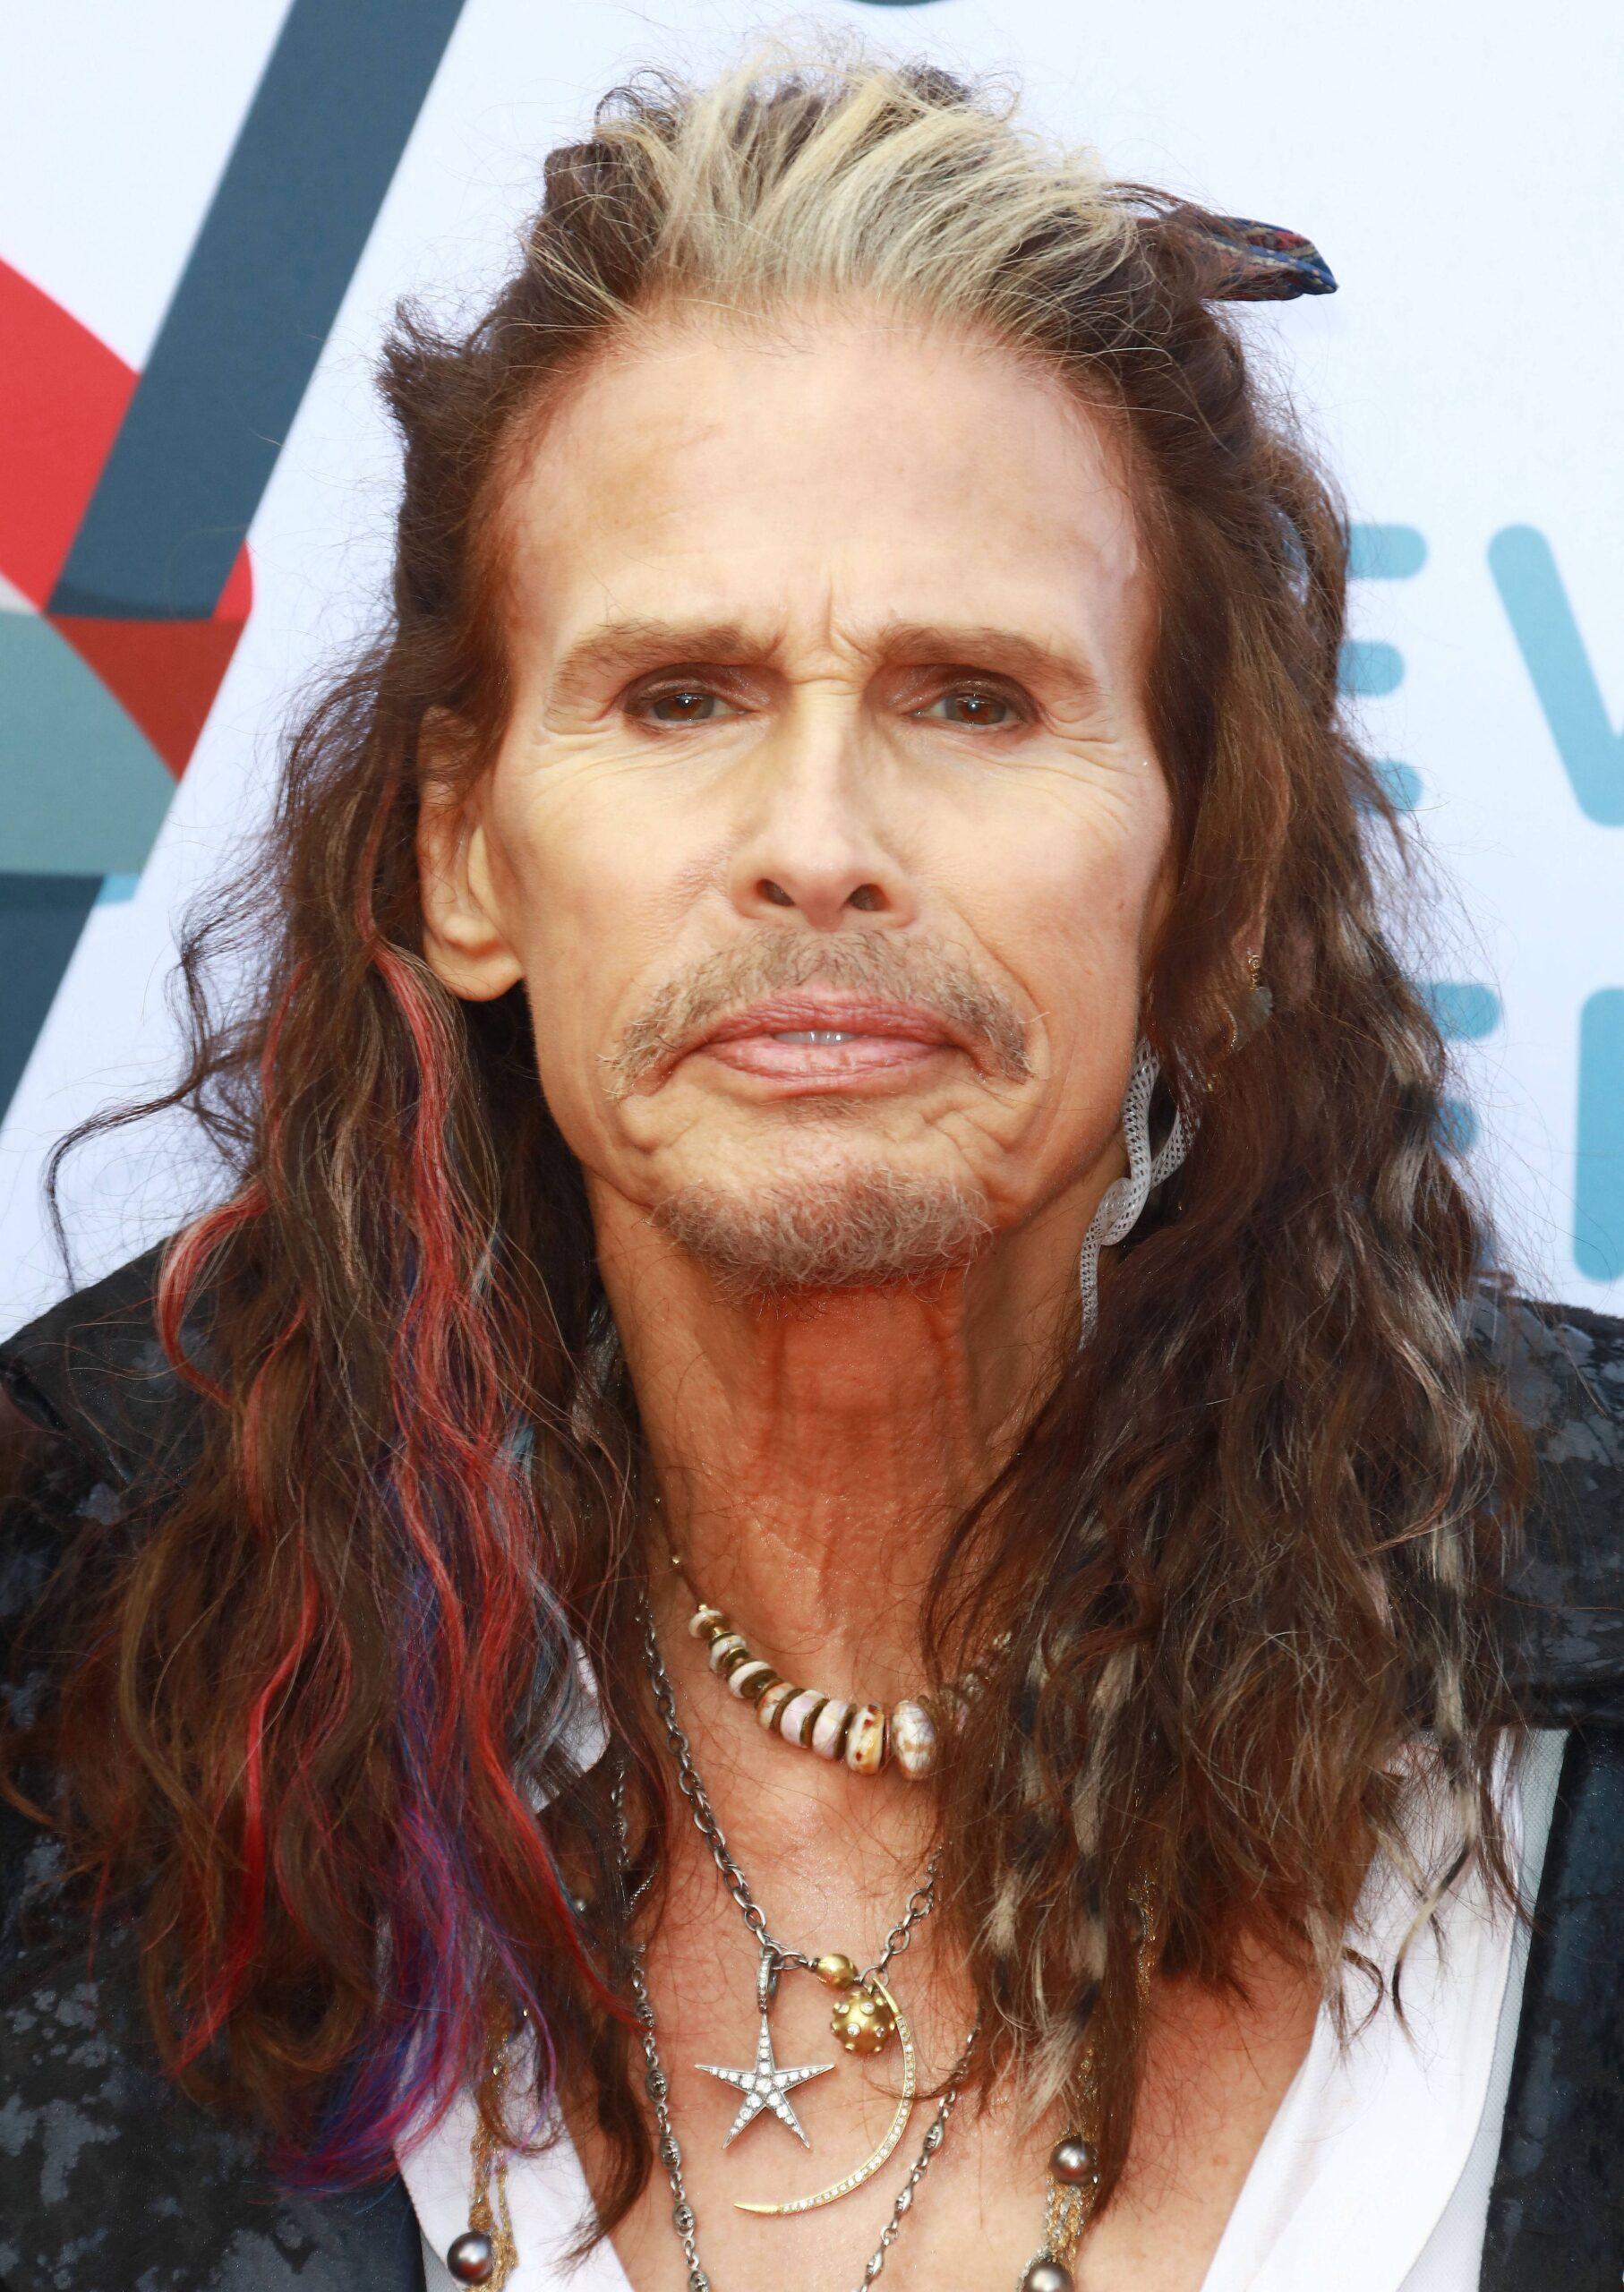 Aerosmith's Steven Tyler Accused Of Sexually Assaulting Teen Model